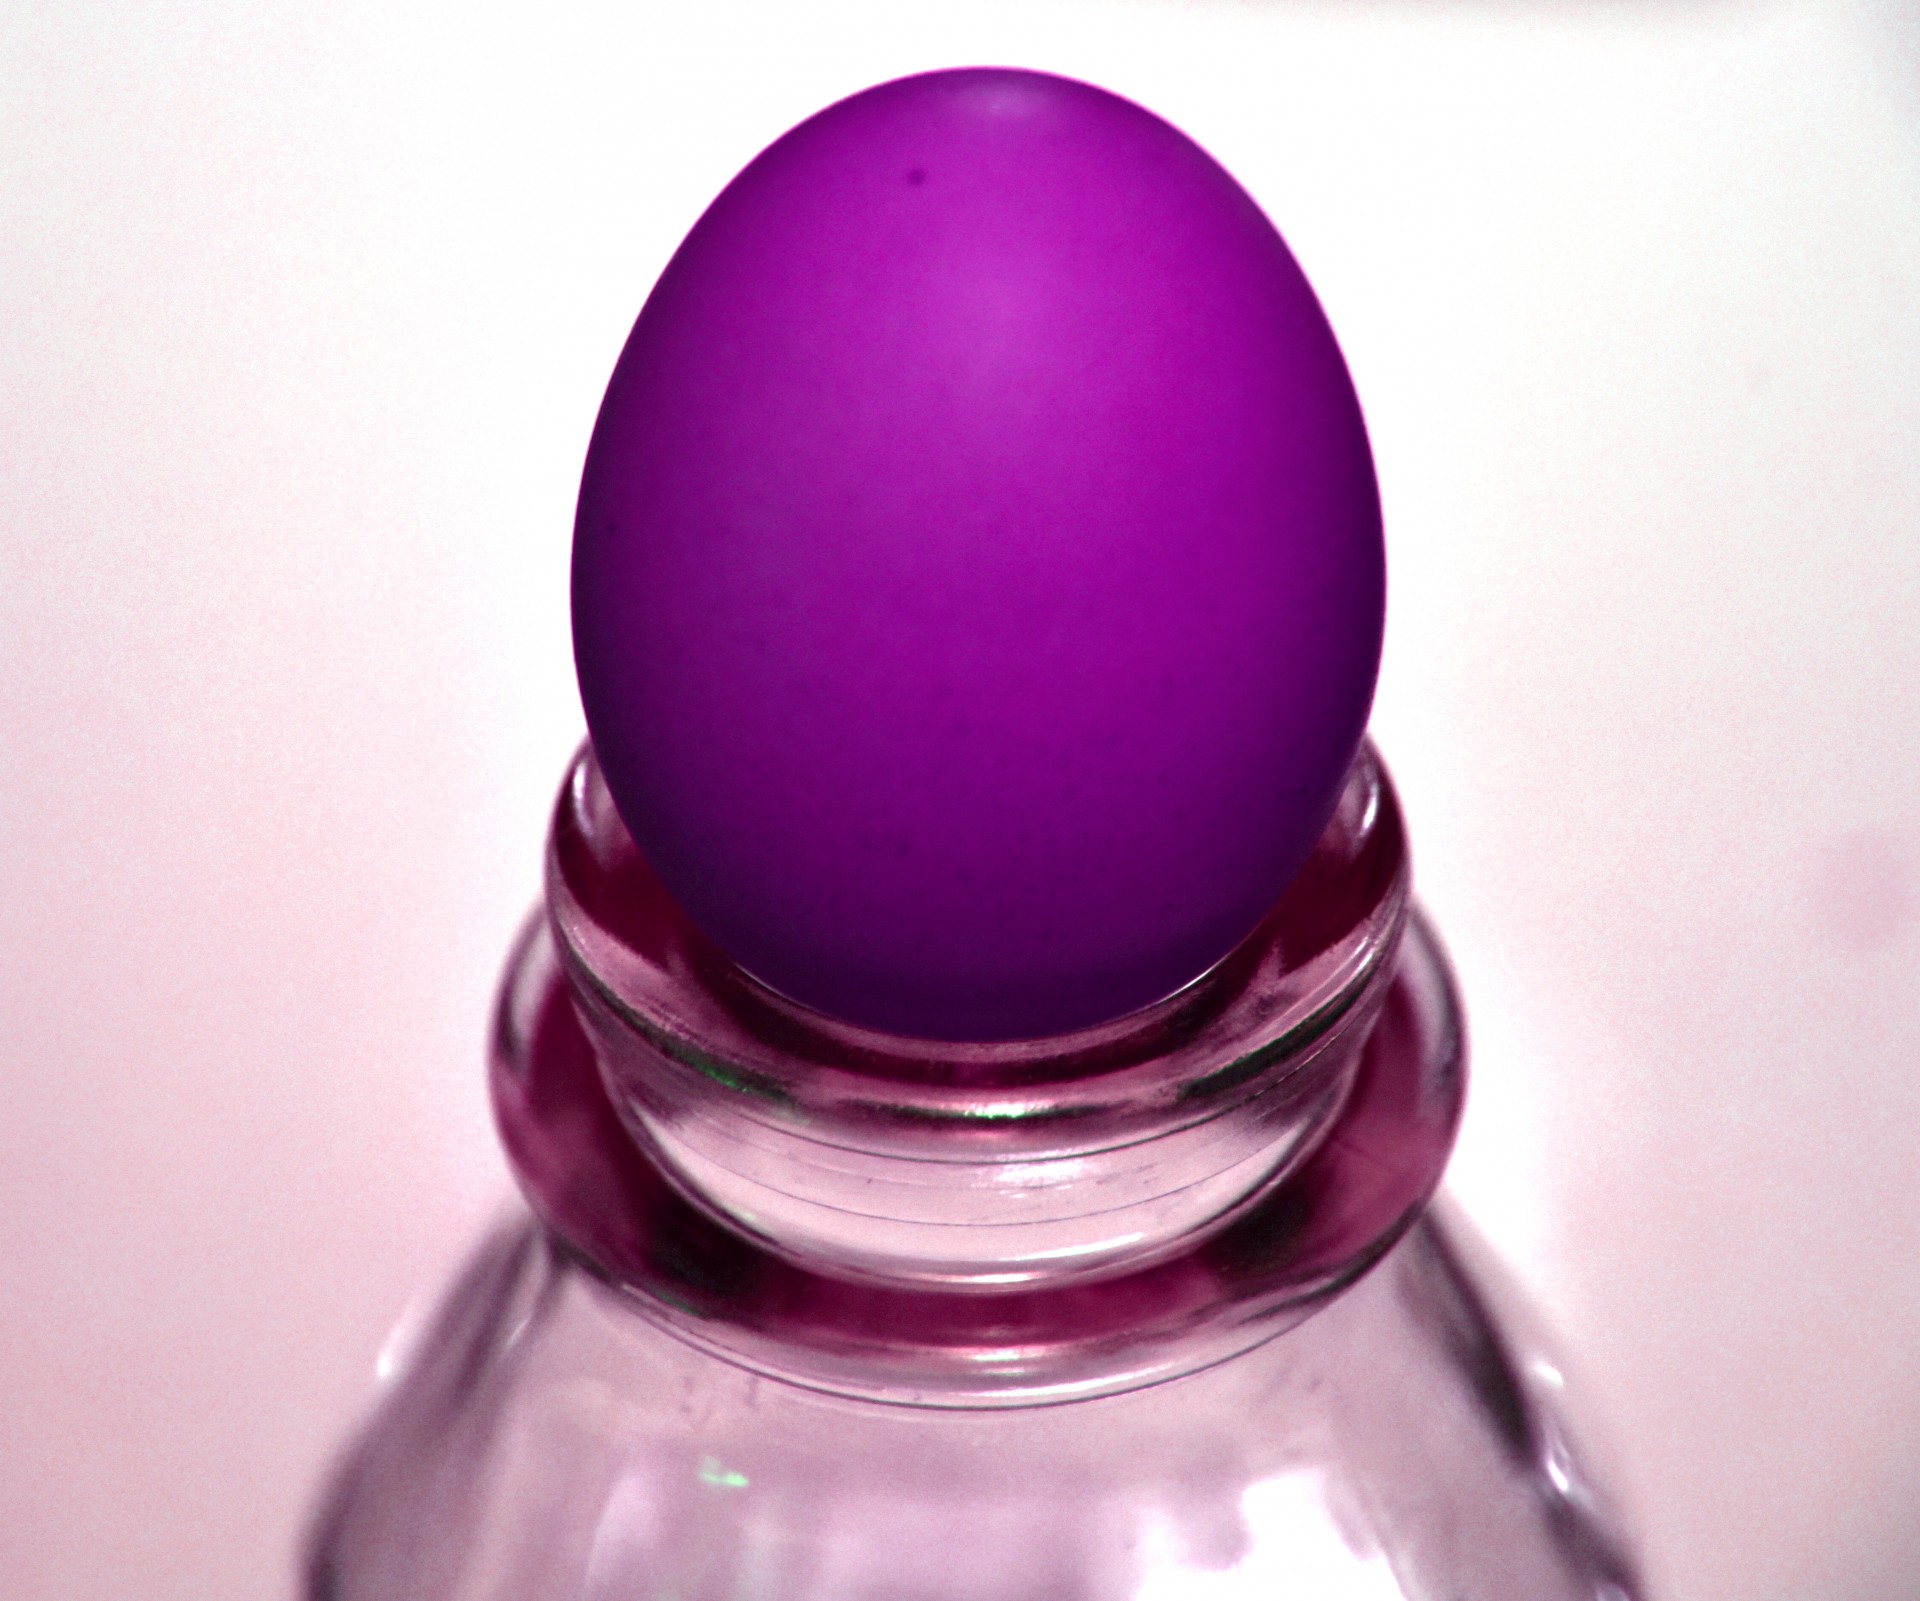 Purple egg perched on a glass milk bottle closeup